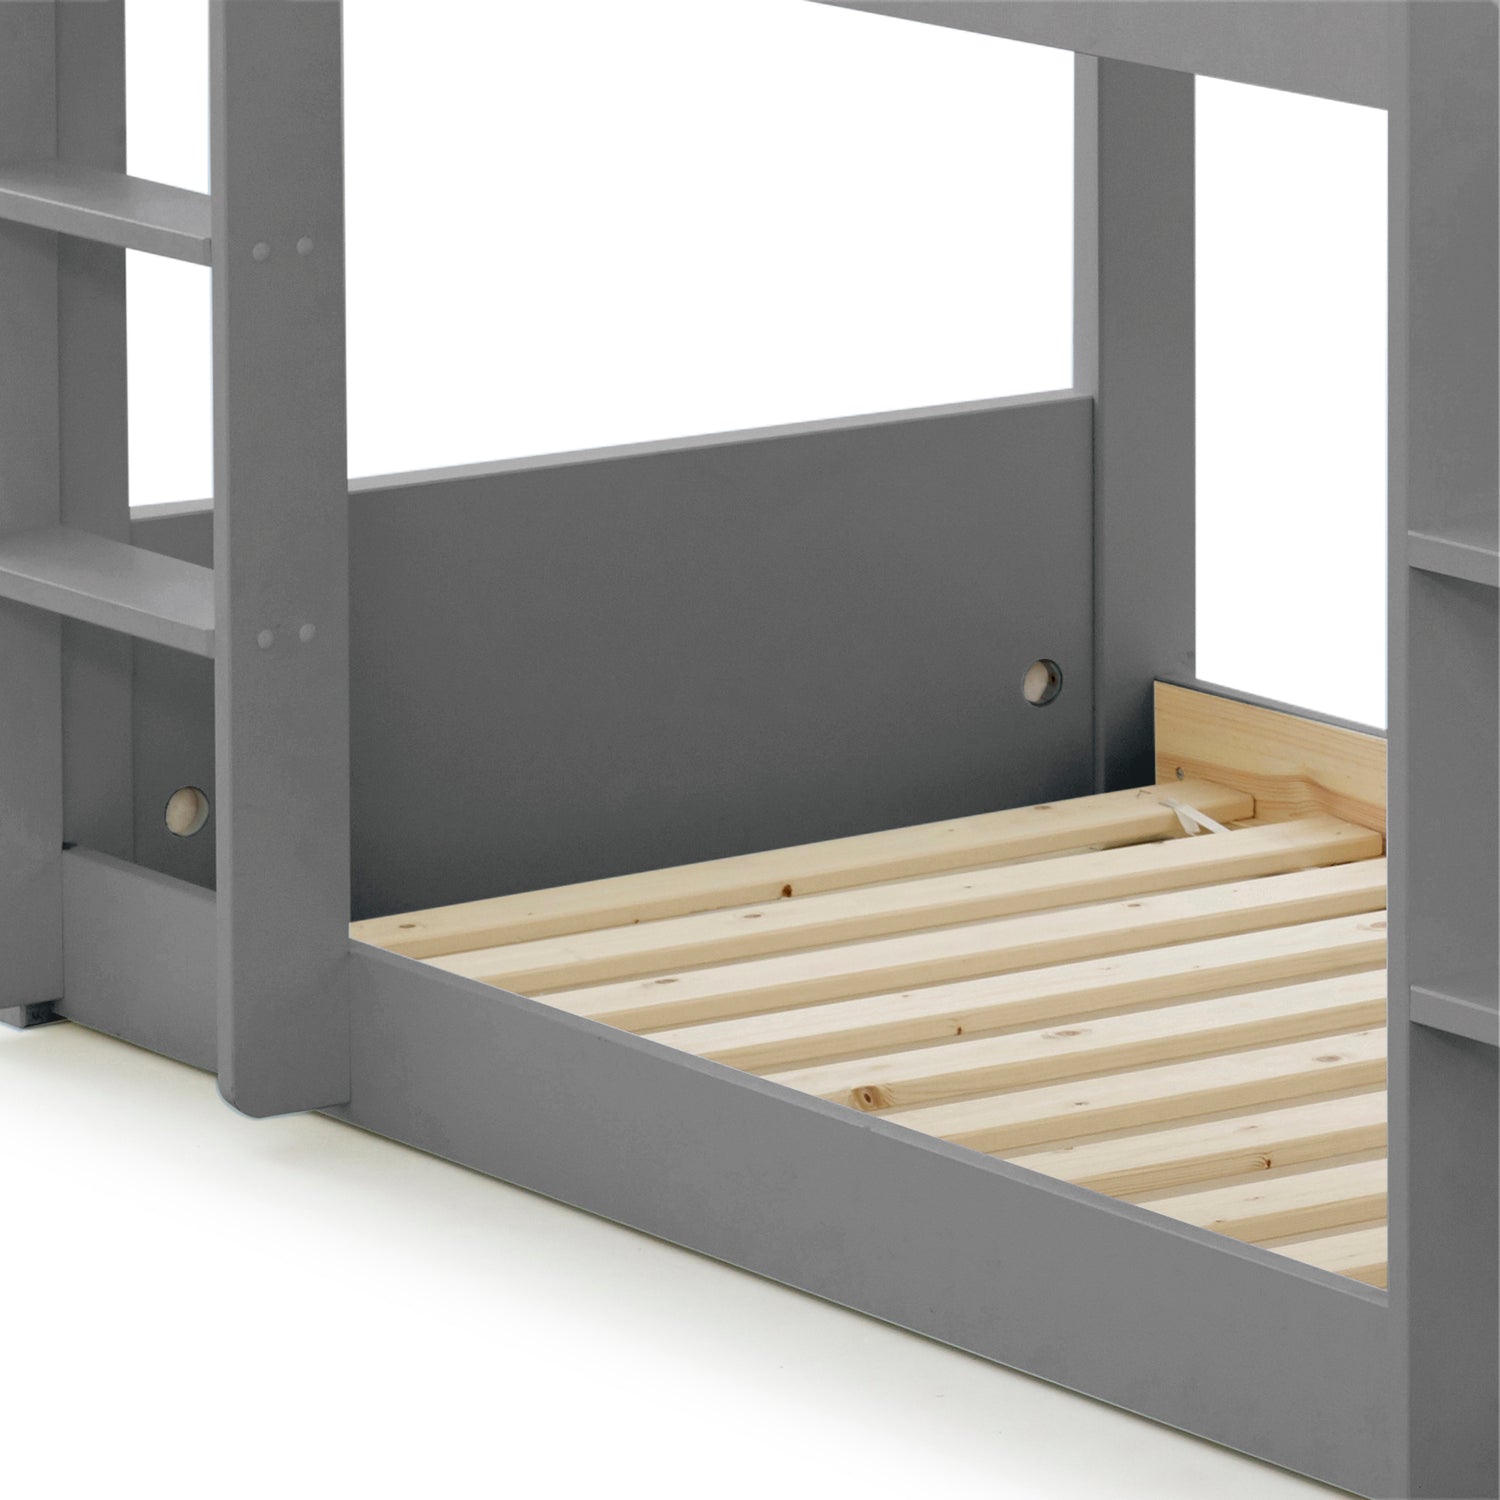 Bedmaster Snowdon Tri Bunk Bed Slats Detail-Better Bed Company 